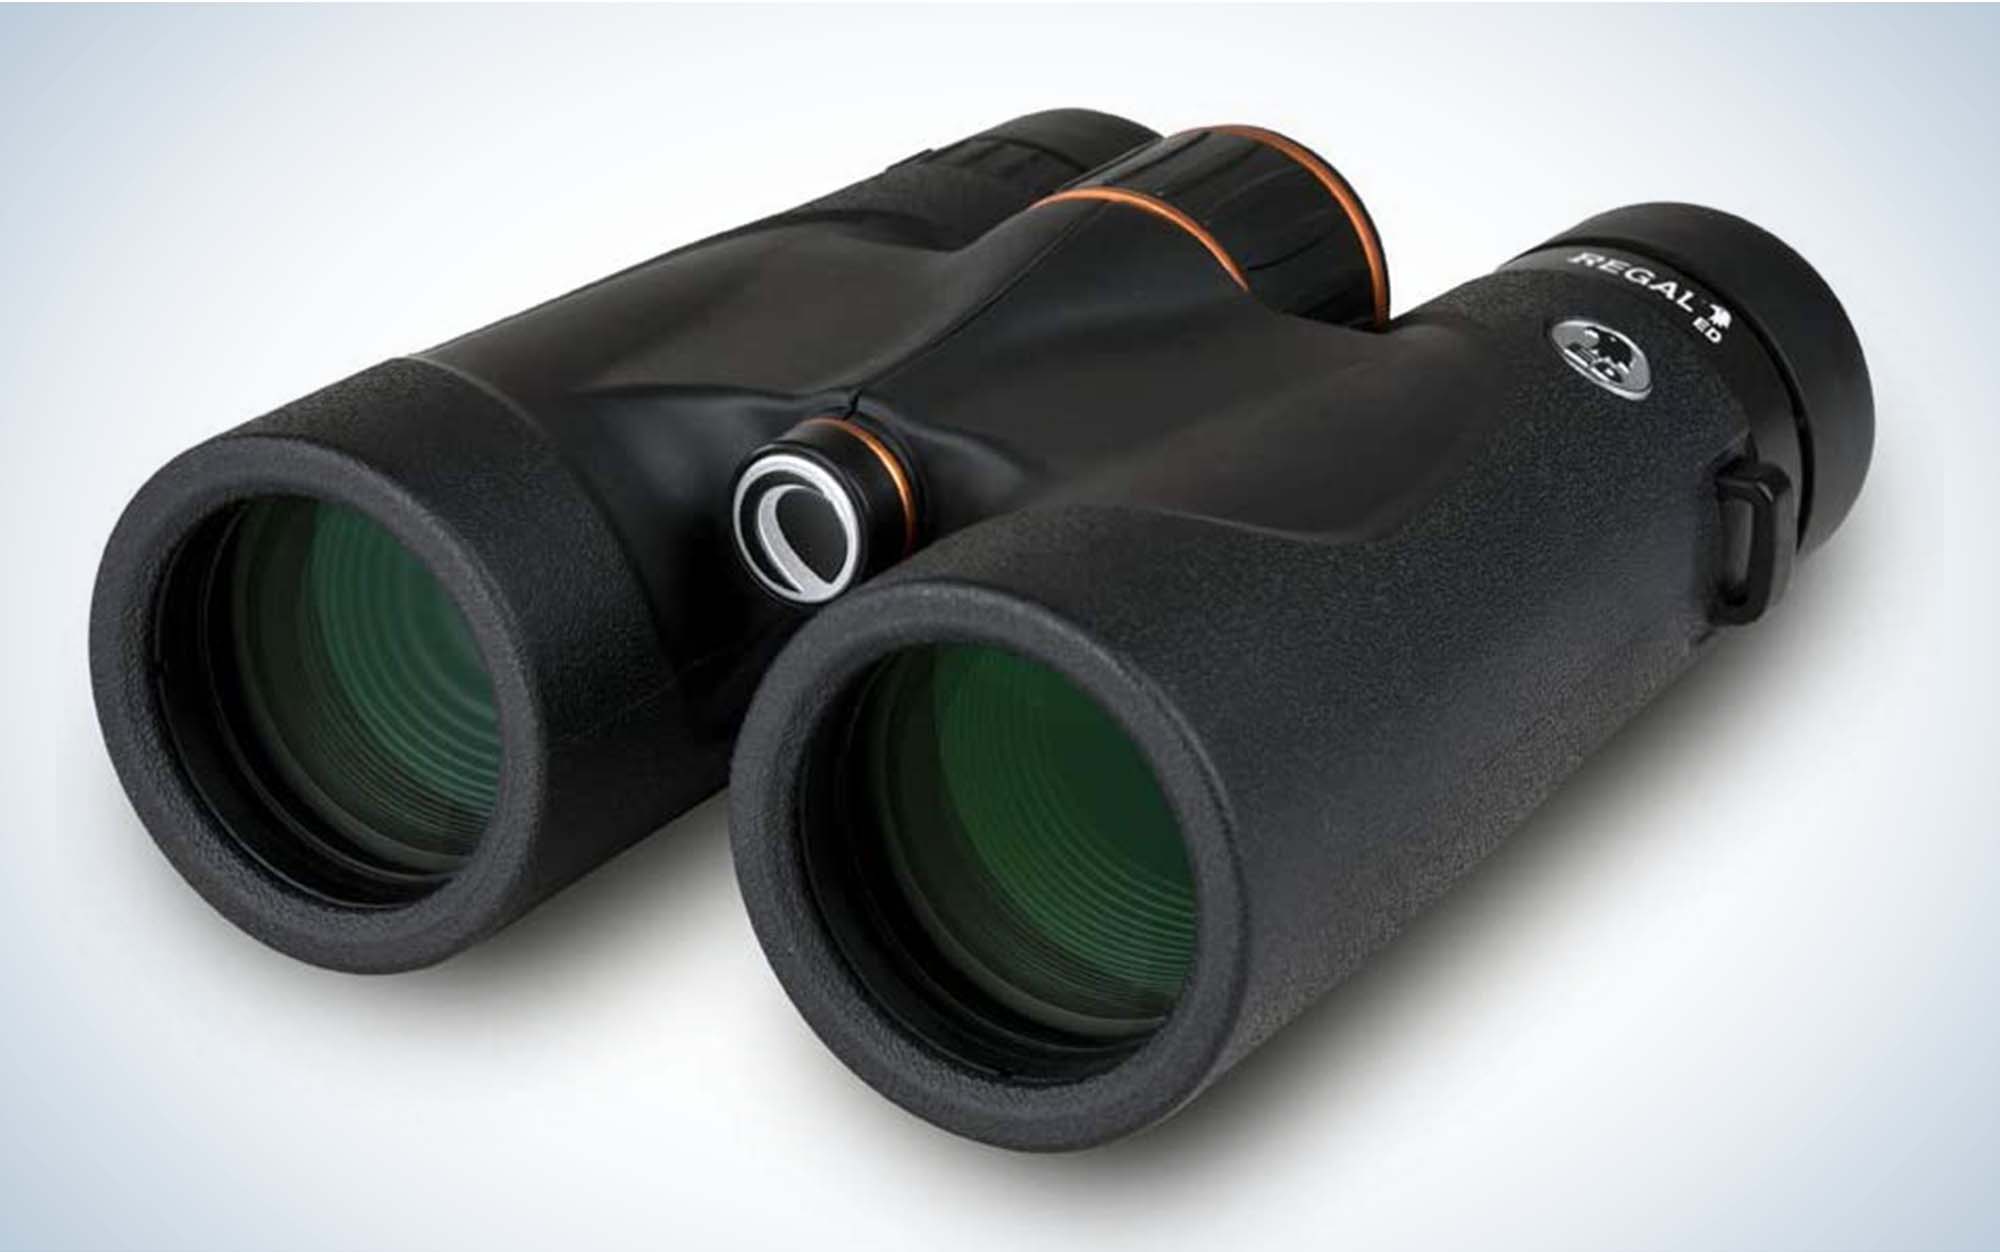 The Celestron Regal ED are 10x42 binoculars.